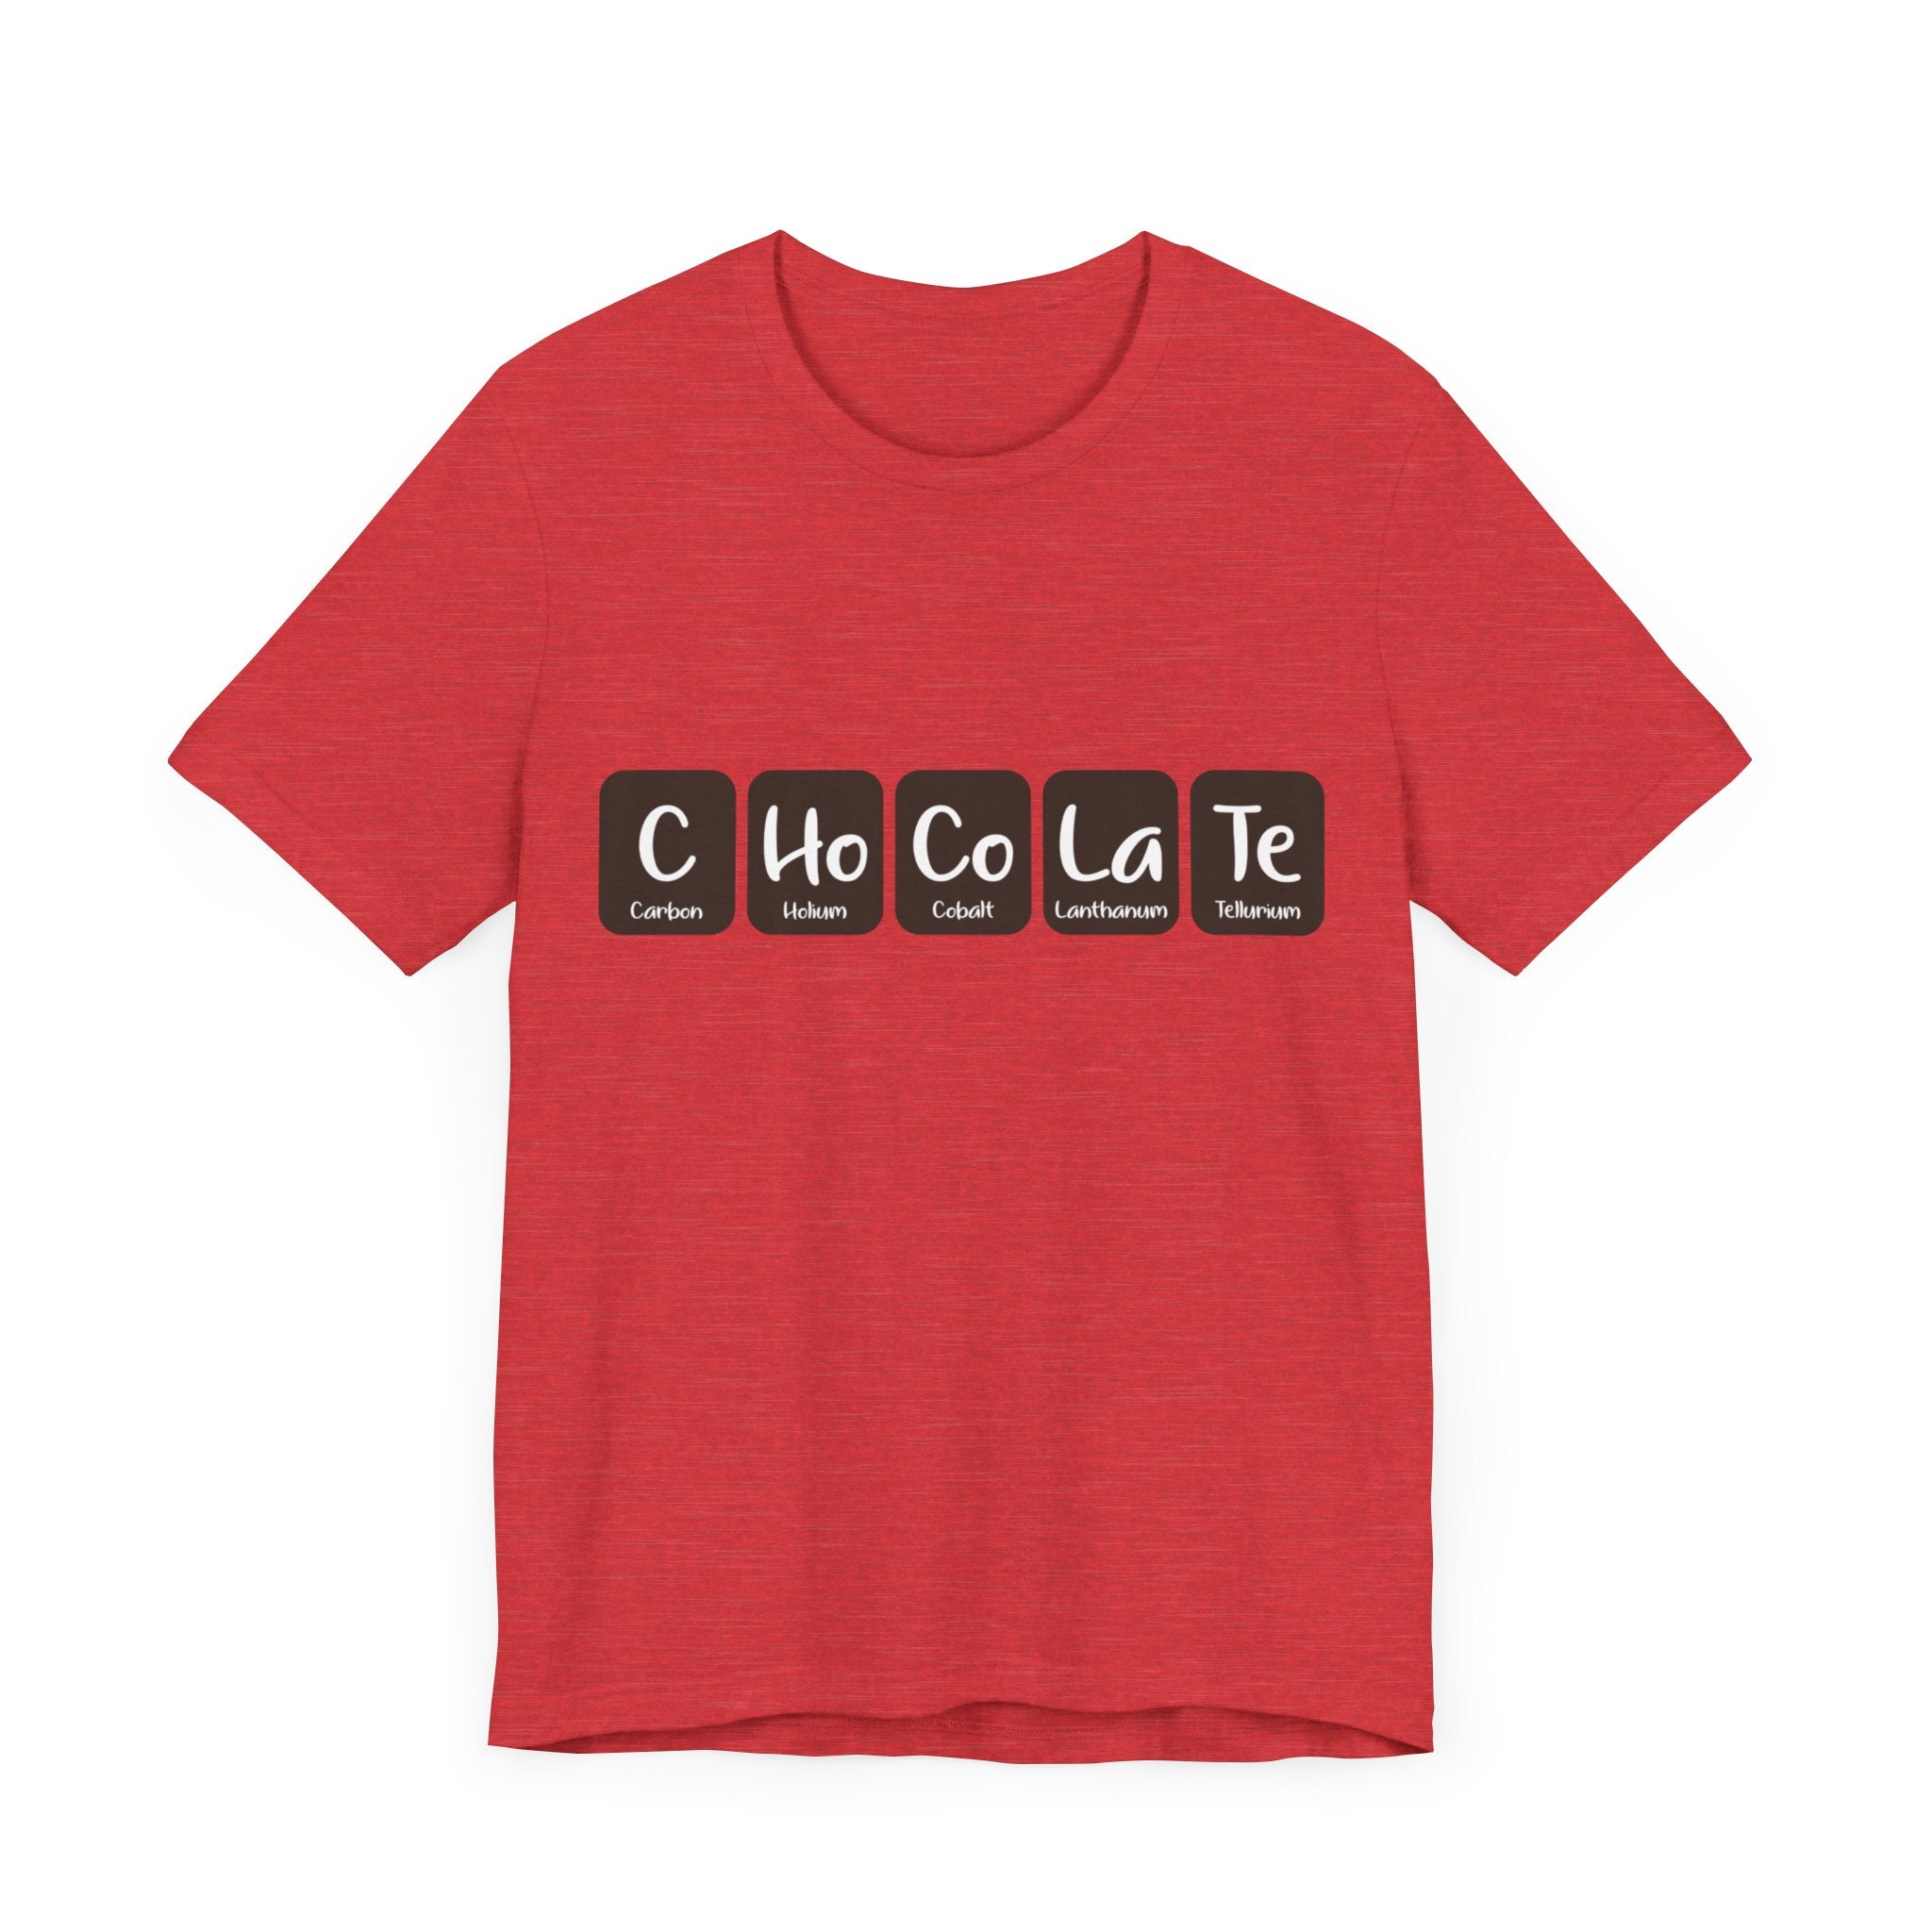 C-Ho-Co-La-Te - T-Shirt with a stylish C-Ho-Co-La-Te design, using periodic table elements: Carbon, Holmium, Cobalt, Lanthanum, and Tellurium. Made from 100% Airlume cotton for ultimate comfort.